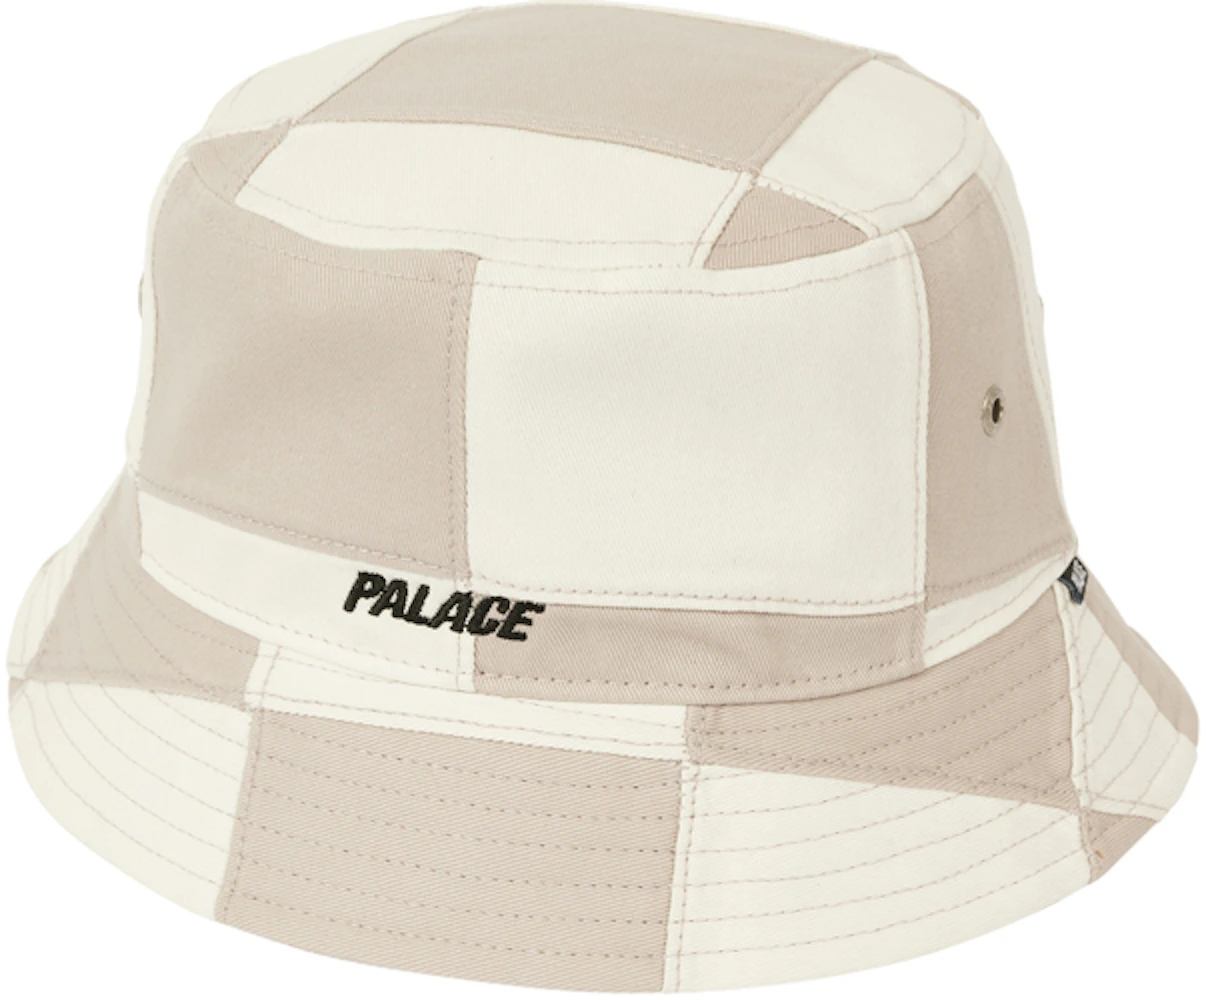 Palace Stitch Up Bucket Hat White Men's - SS21 - US